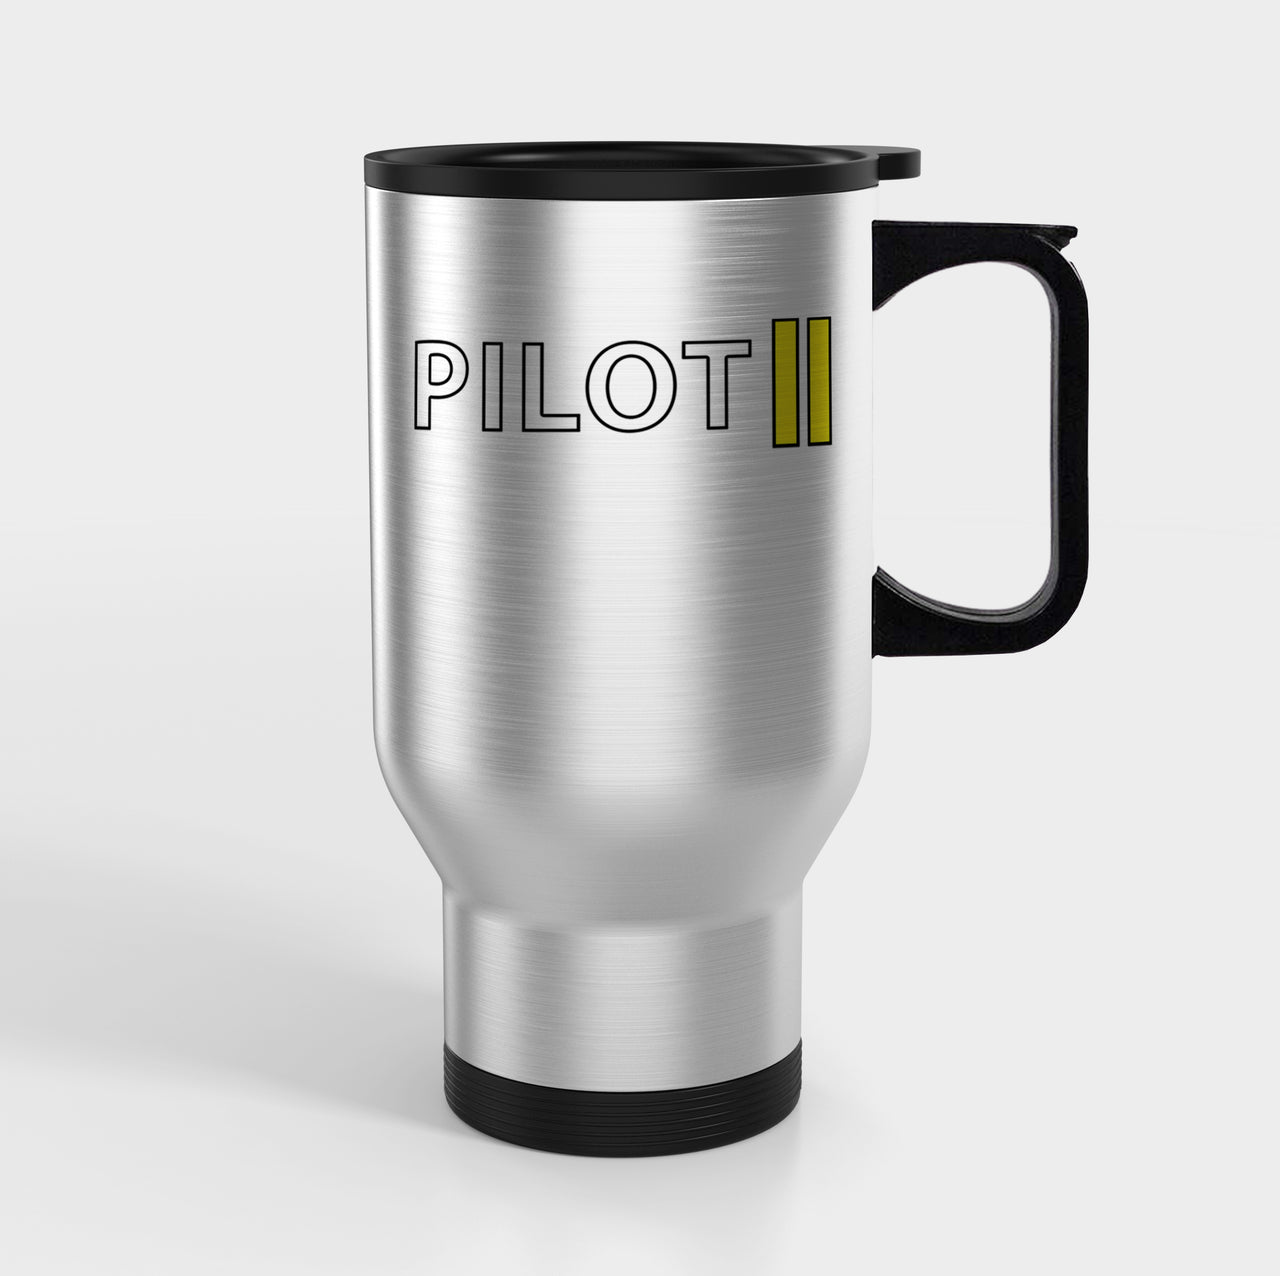 Pilot & Stripes (2 Lines) Designed Travel Mugs (With Holder)